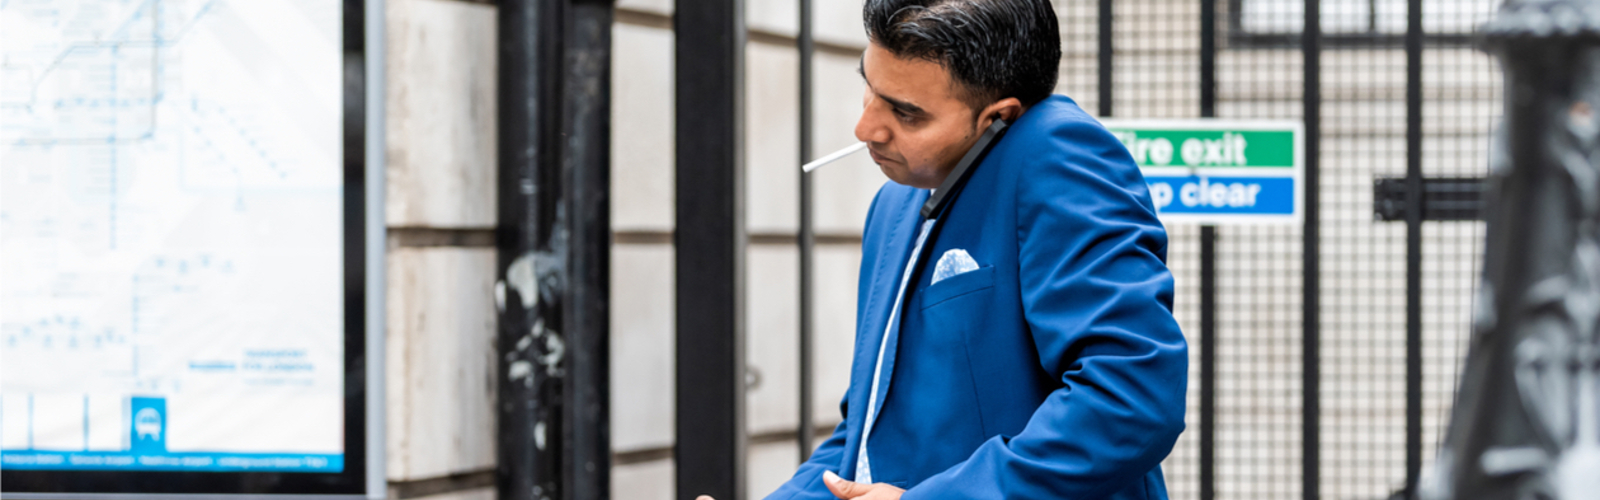 A man cradles a mobile phone while smoking a cigarette